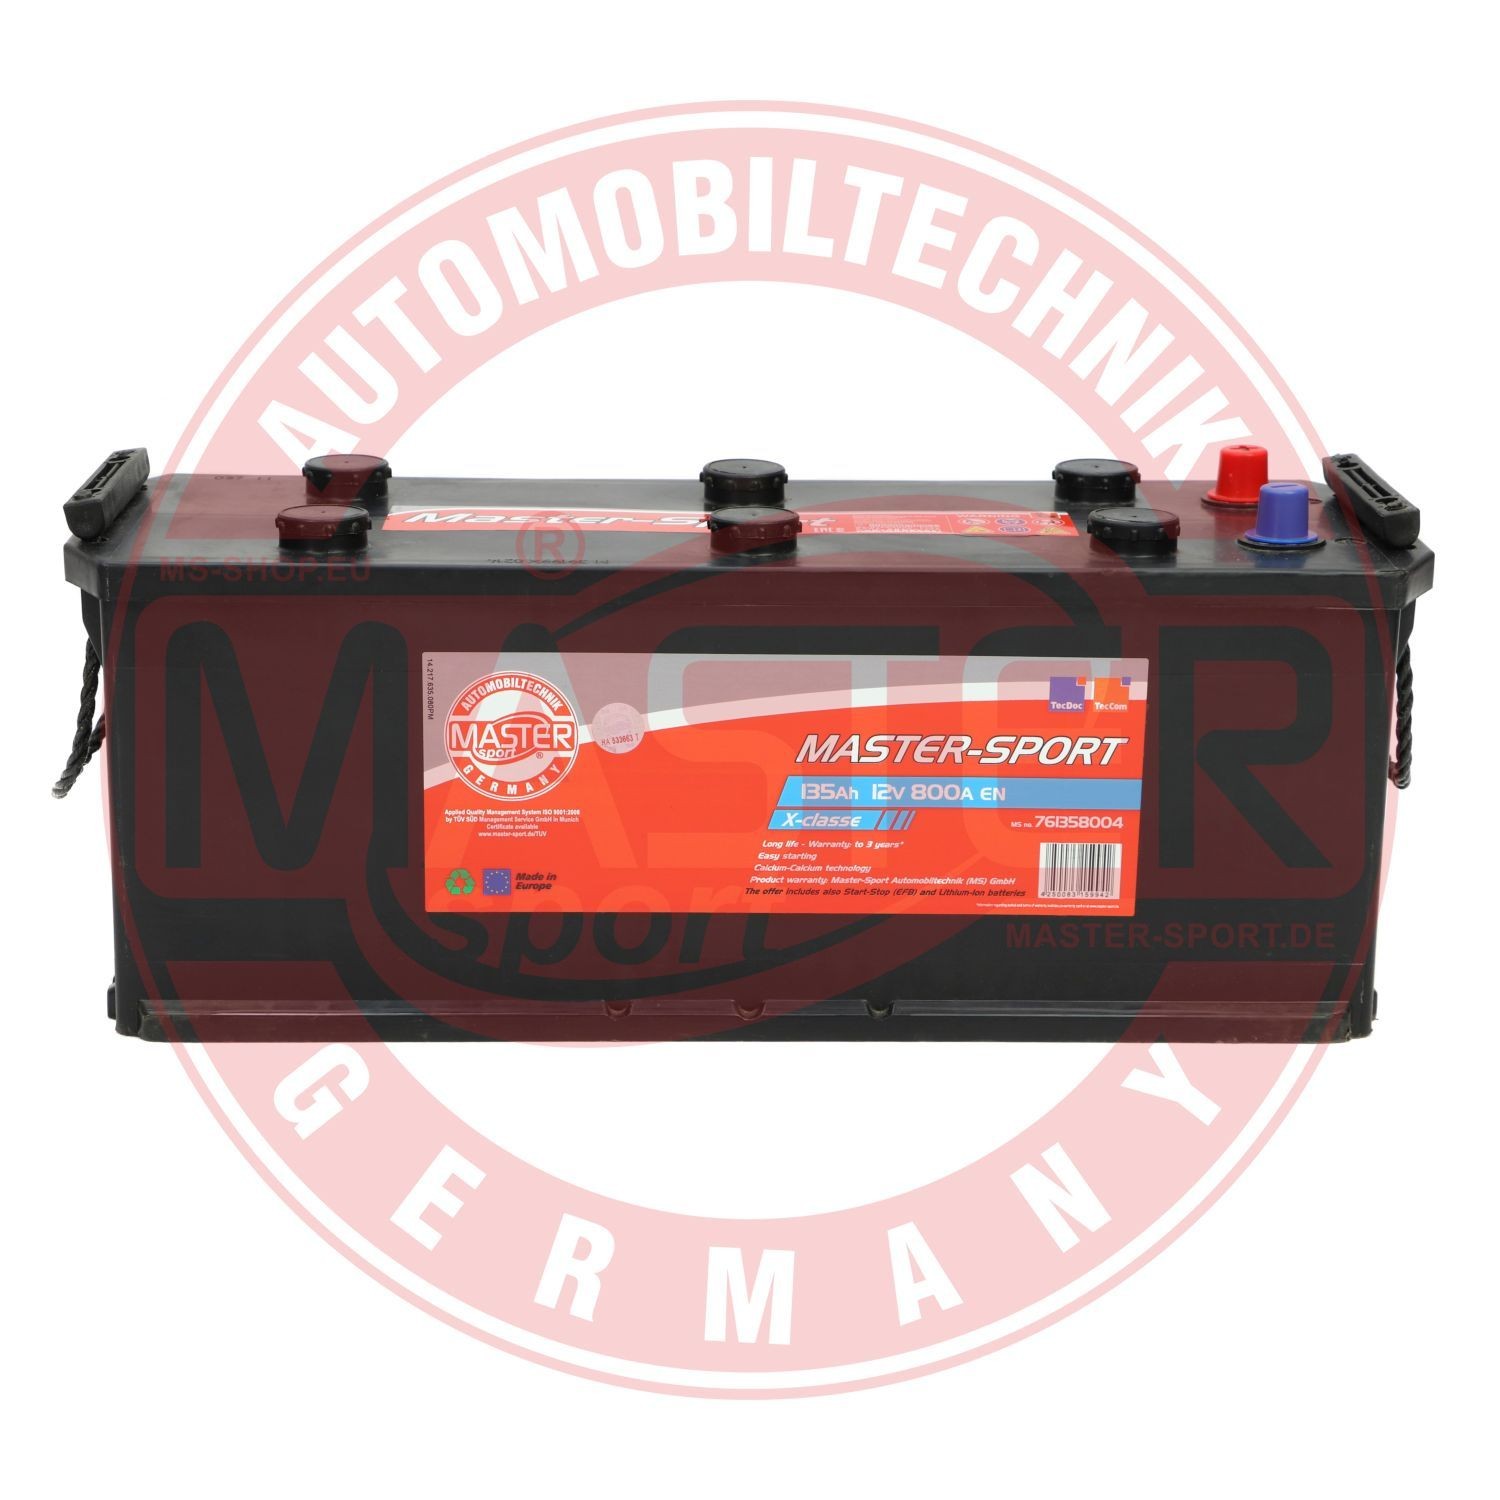 MASTER-SPORT 12V 135Ah 800A B03 Lead-acid battery Starter battery 761358004 buy